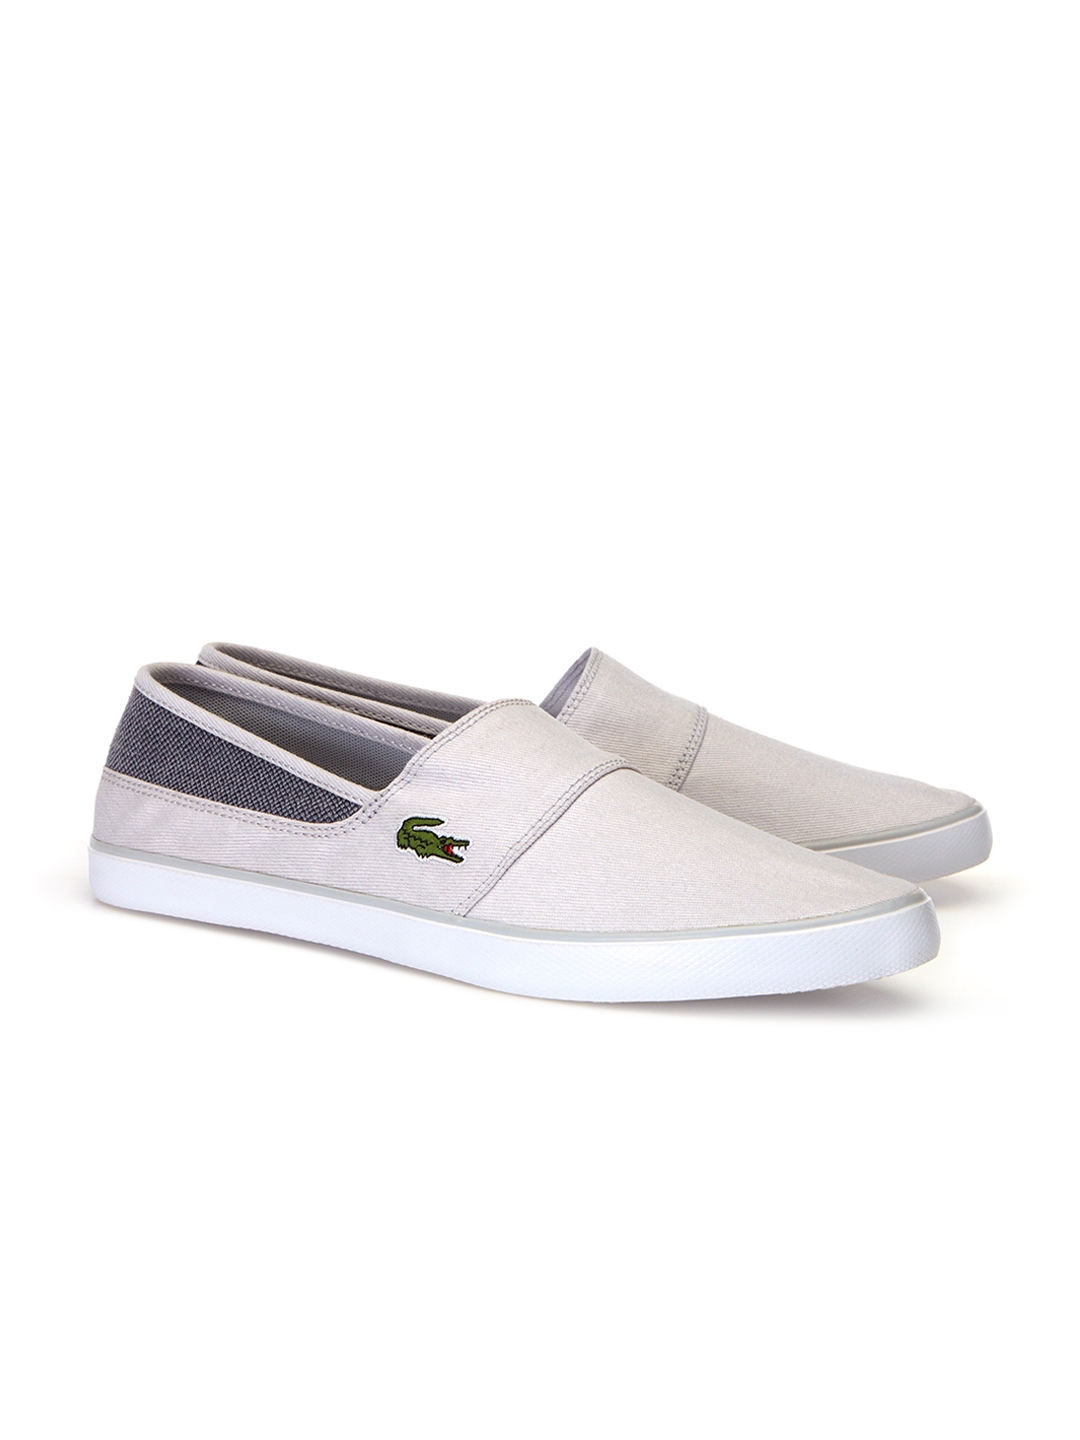 Buy Lacoste Men Grey Slip On Sneakers - Casual Shoes for Men 7342596 ...